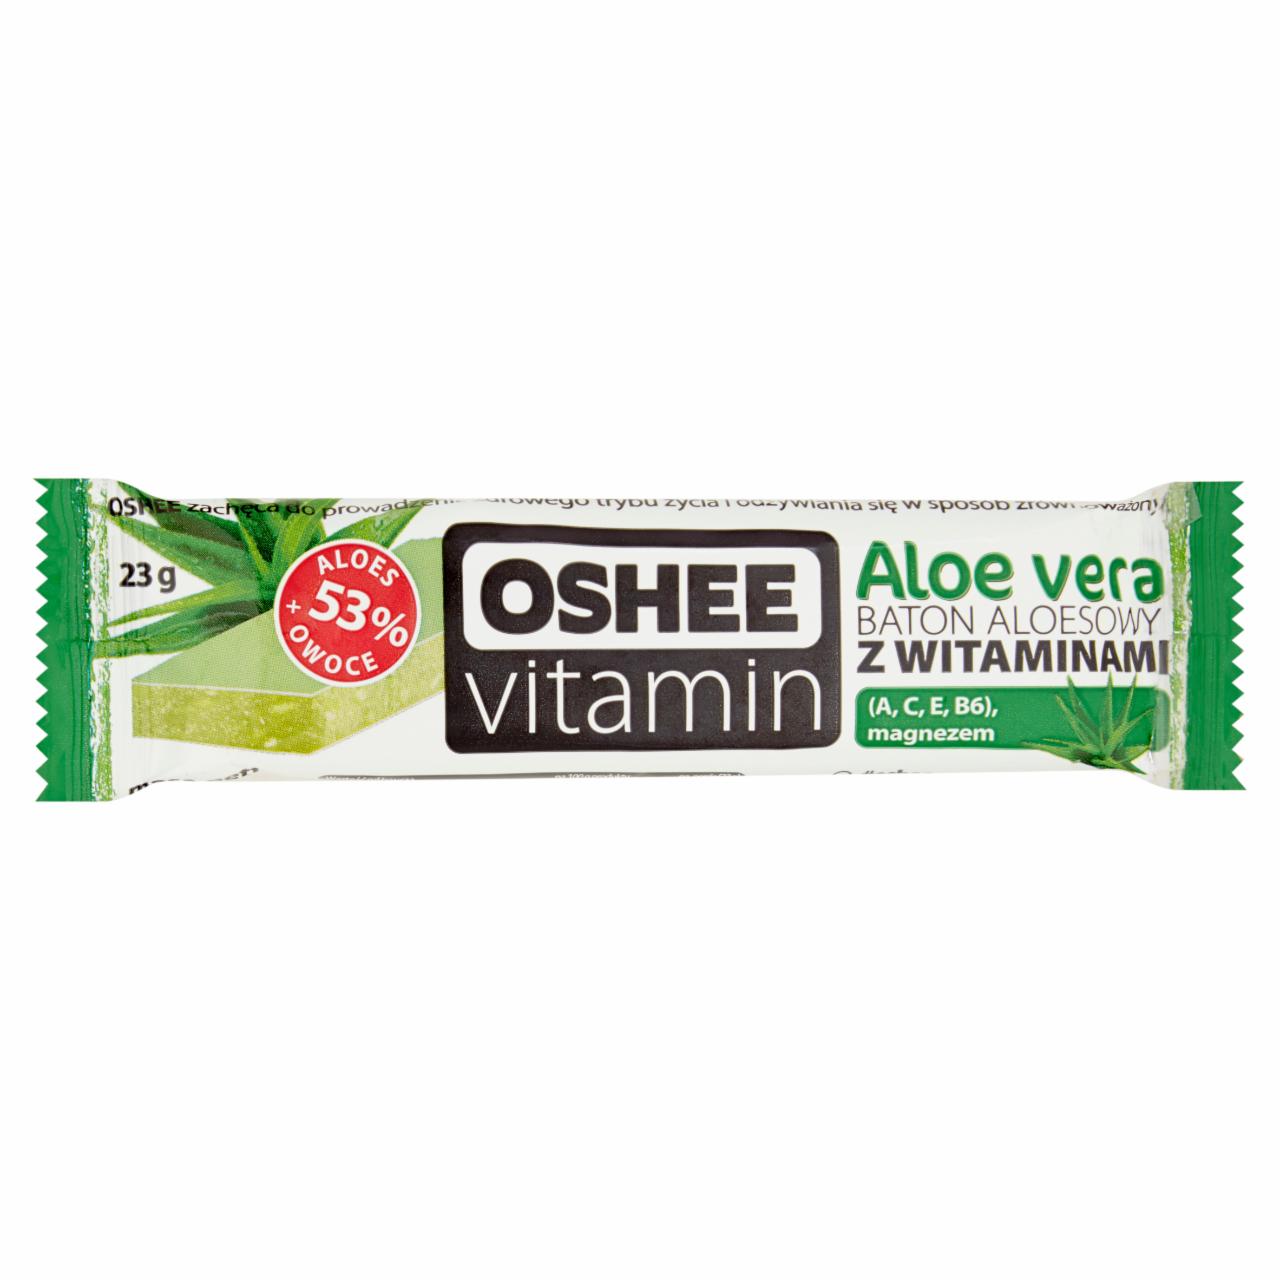 Zdjęcia - Oshee Vitamin Aloe vera Baton aloesowy z witaminami 23 g